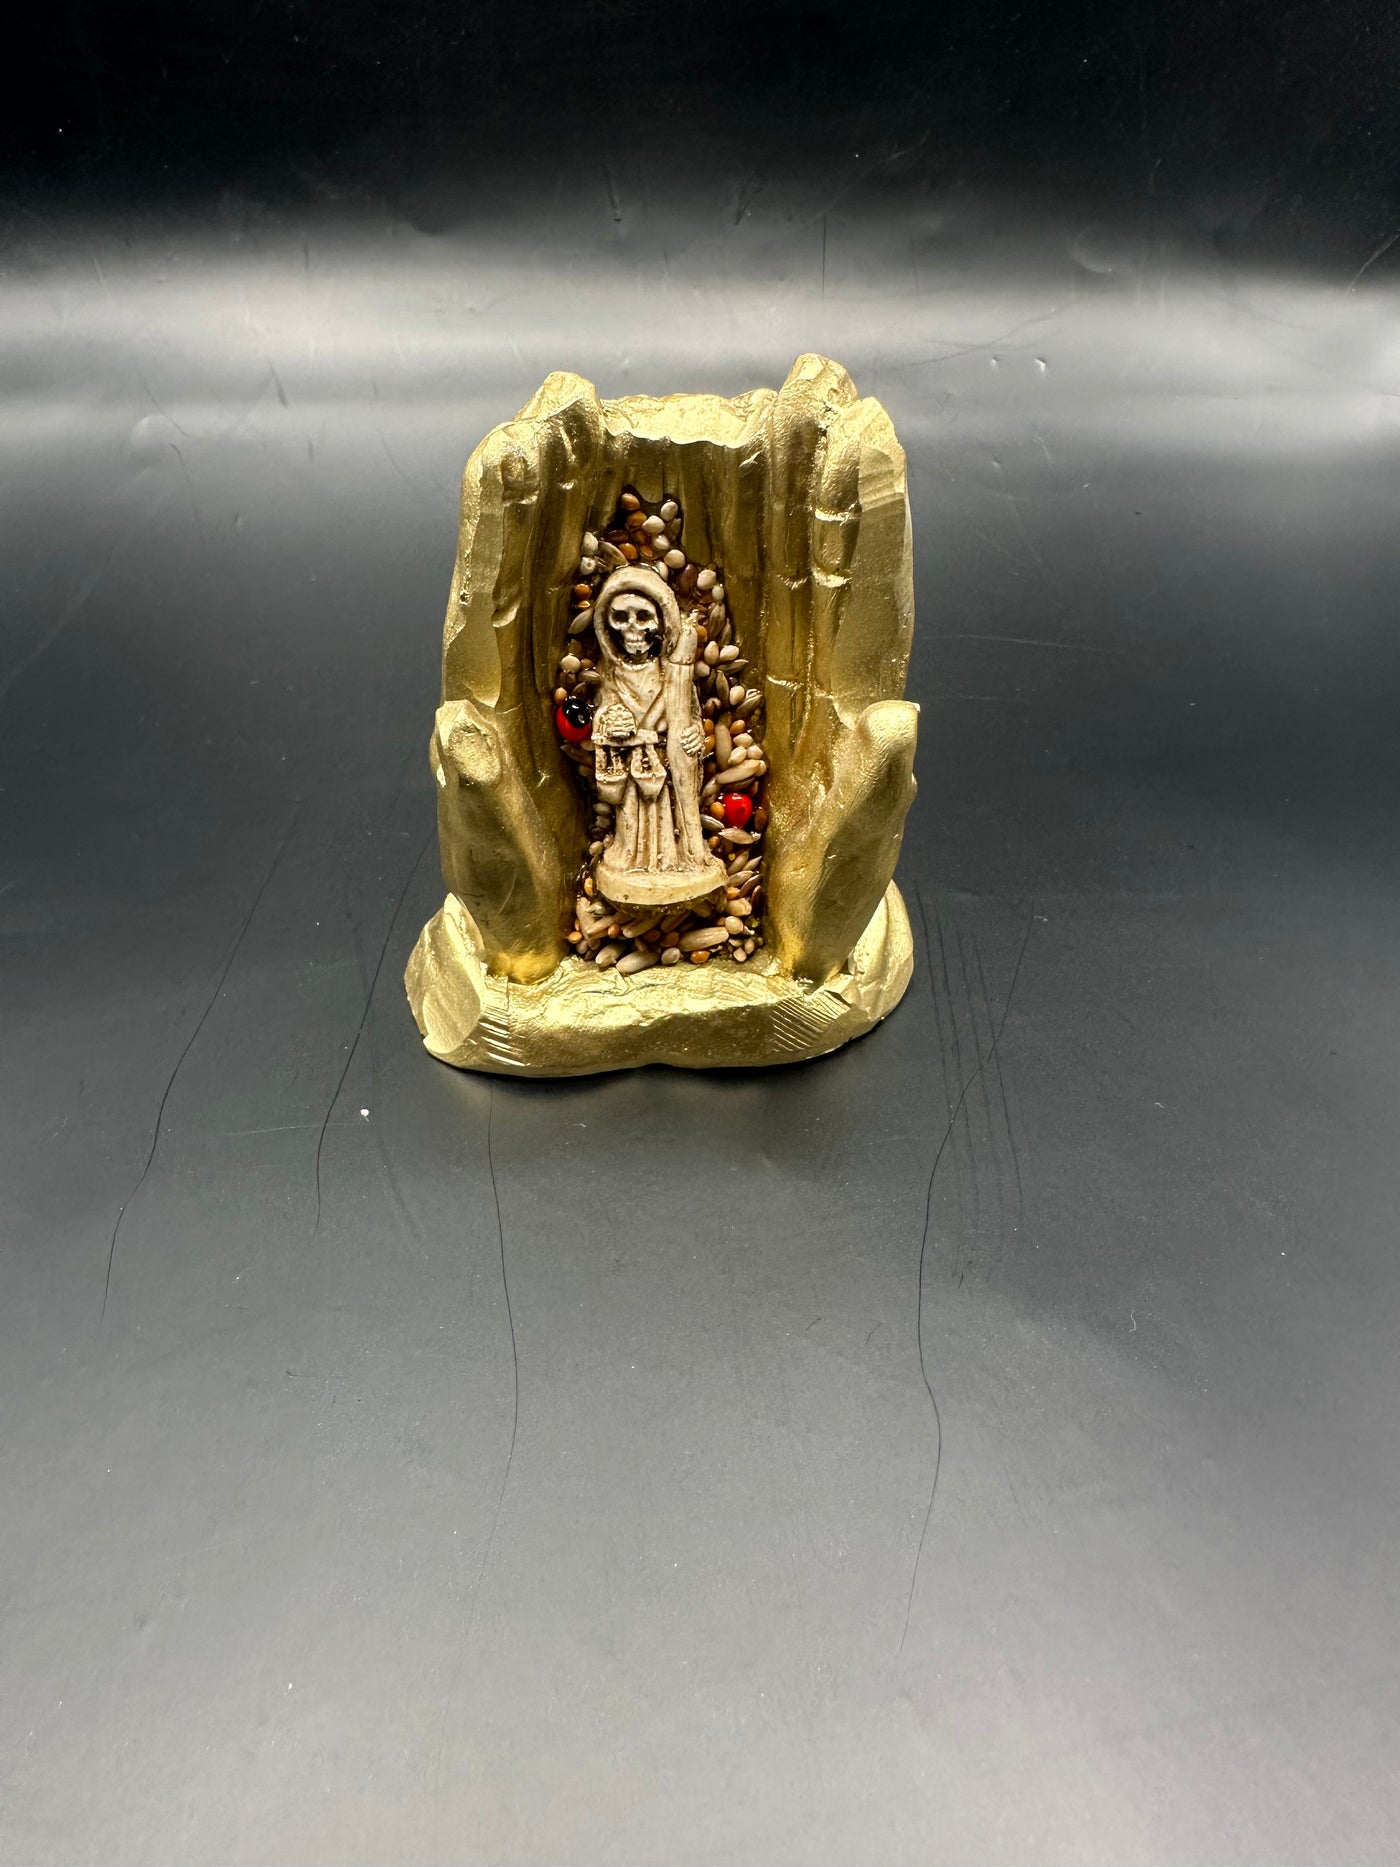 Gold Santa Muerte